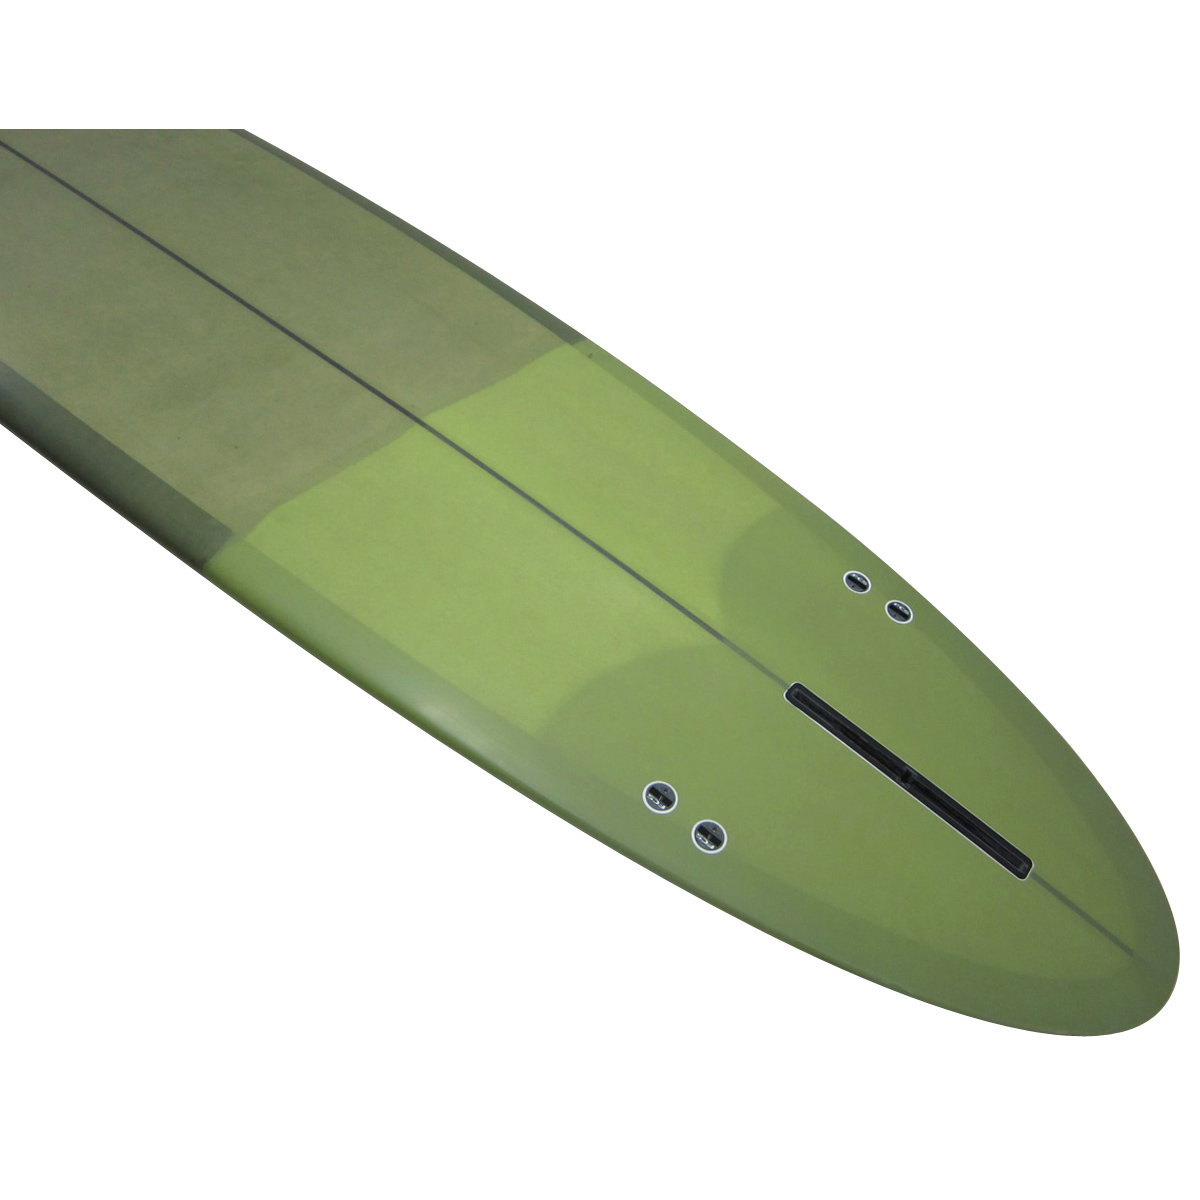 Michael Miller Surfboards / 9`1 Custom